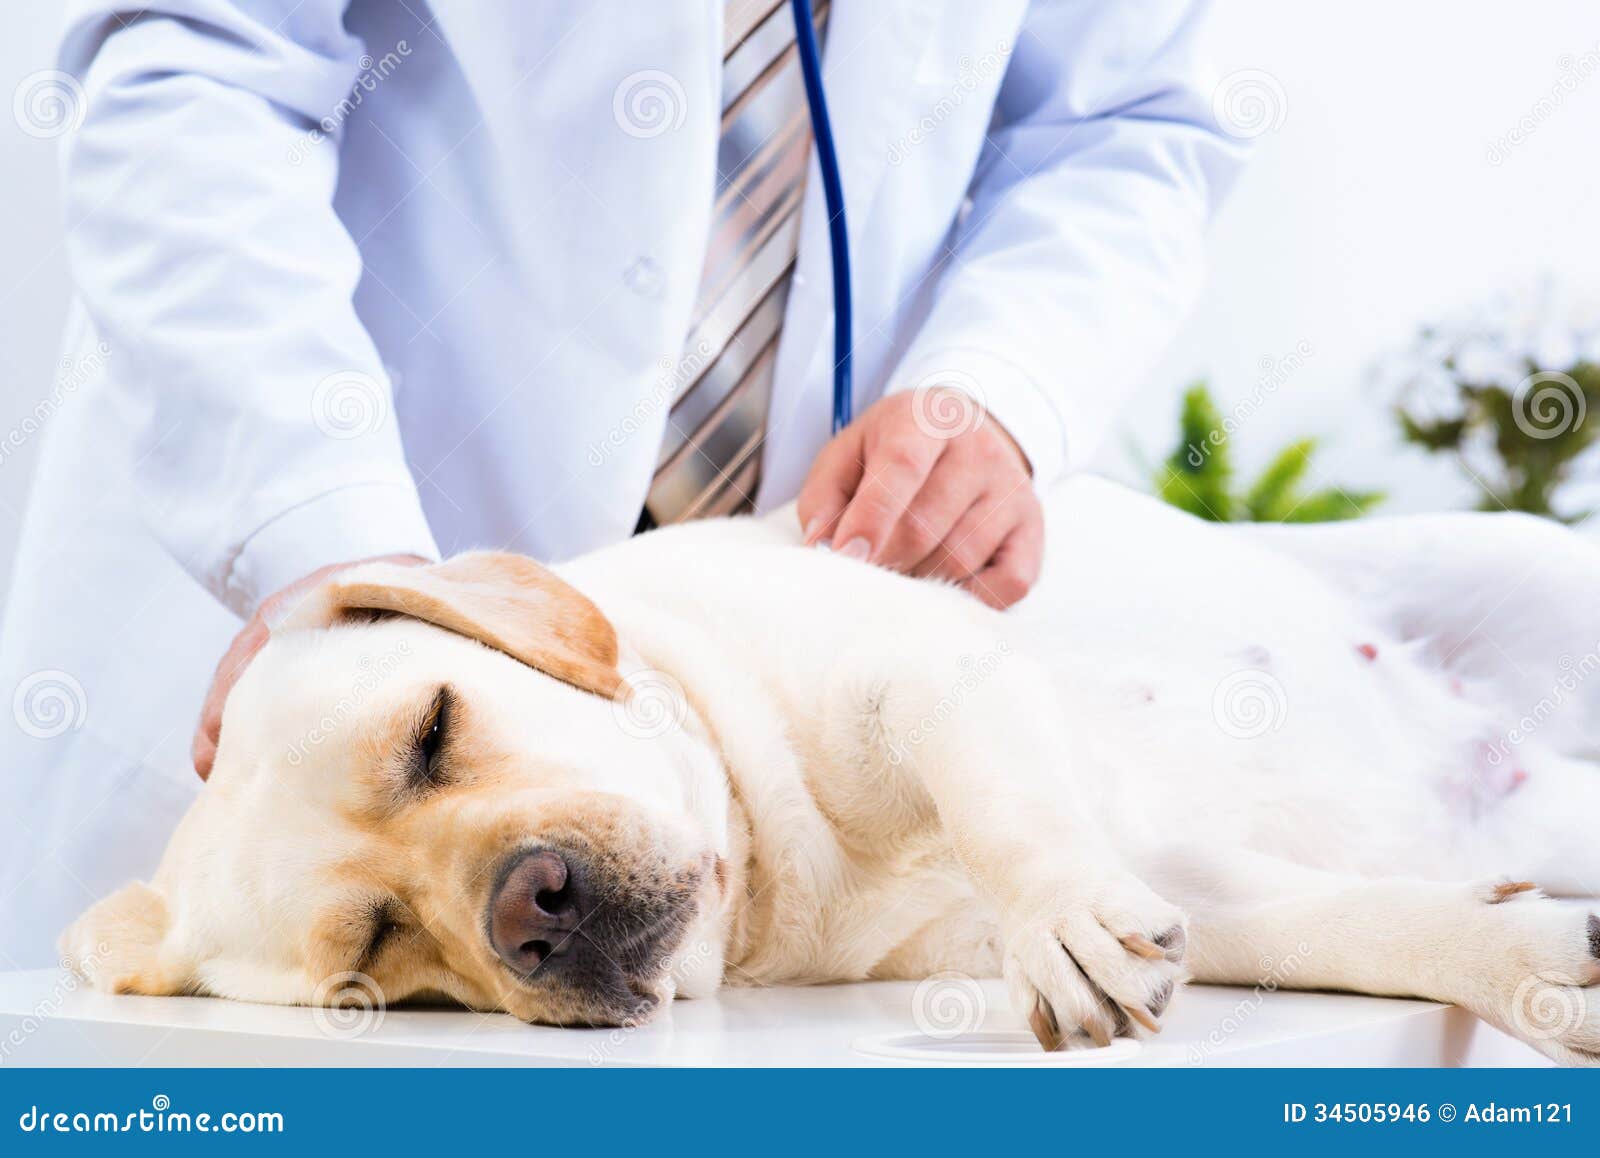 Vet Checks The Health Of A Dog Royalty Free Stock Image